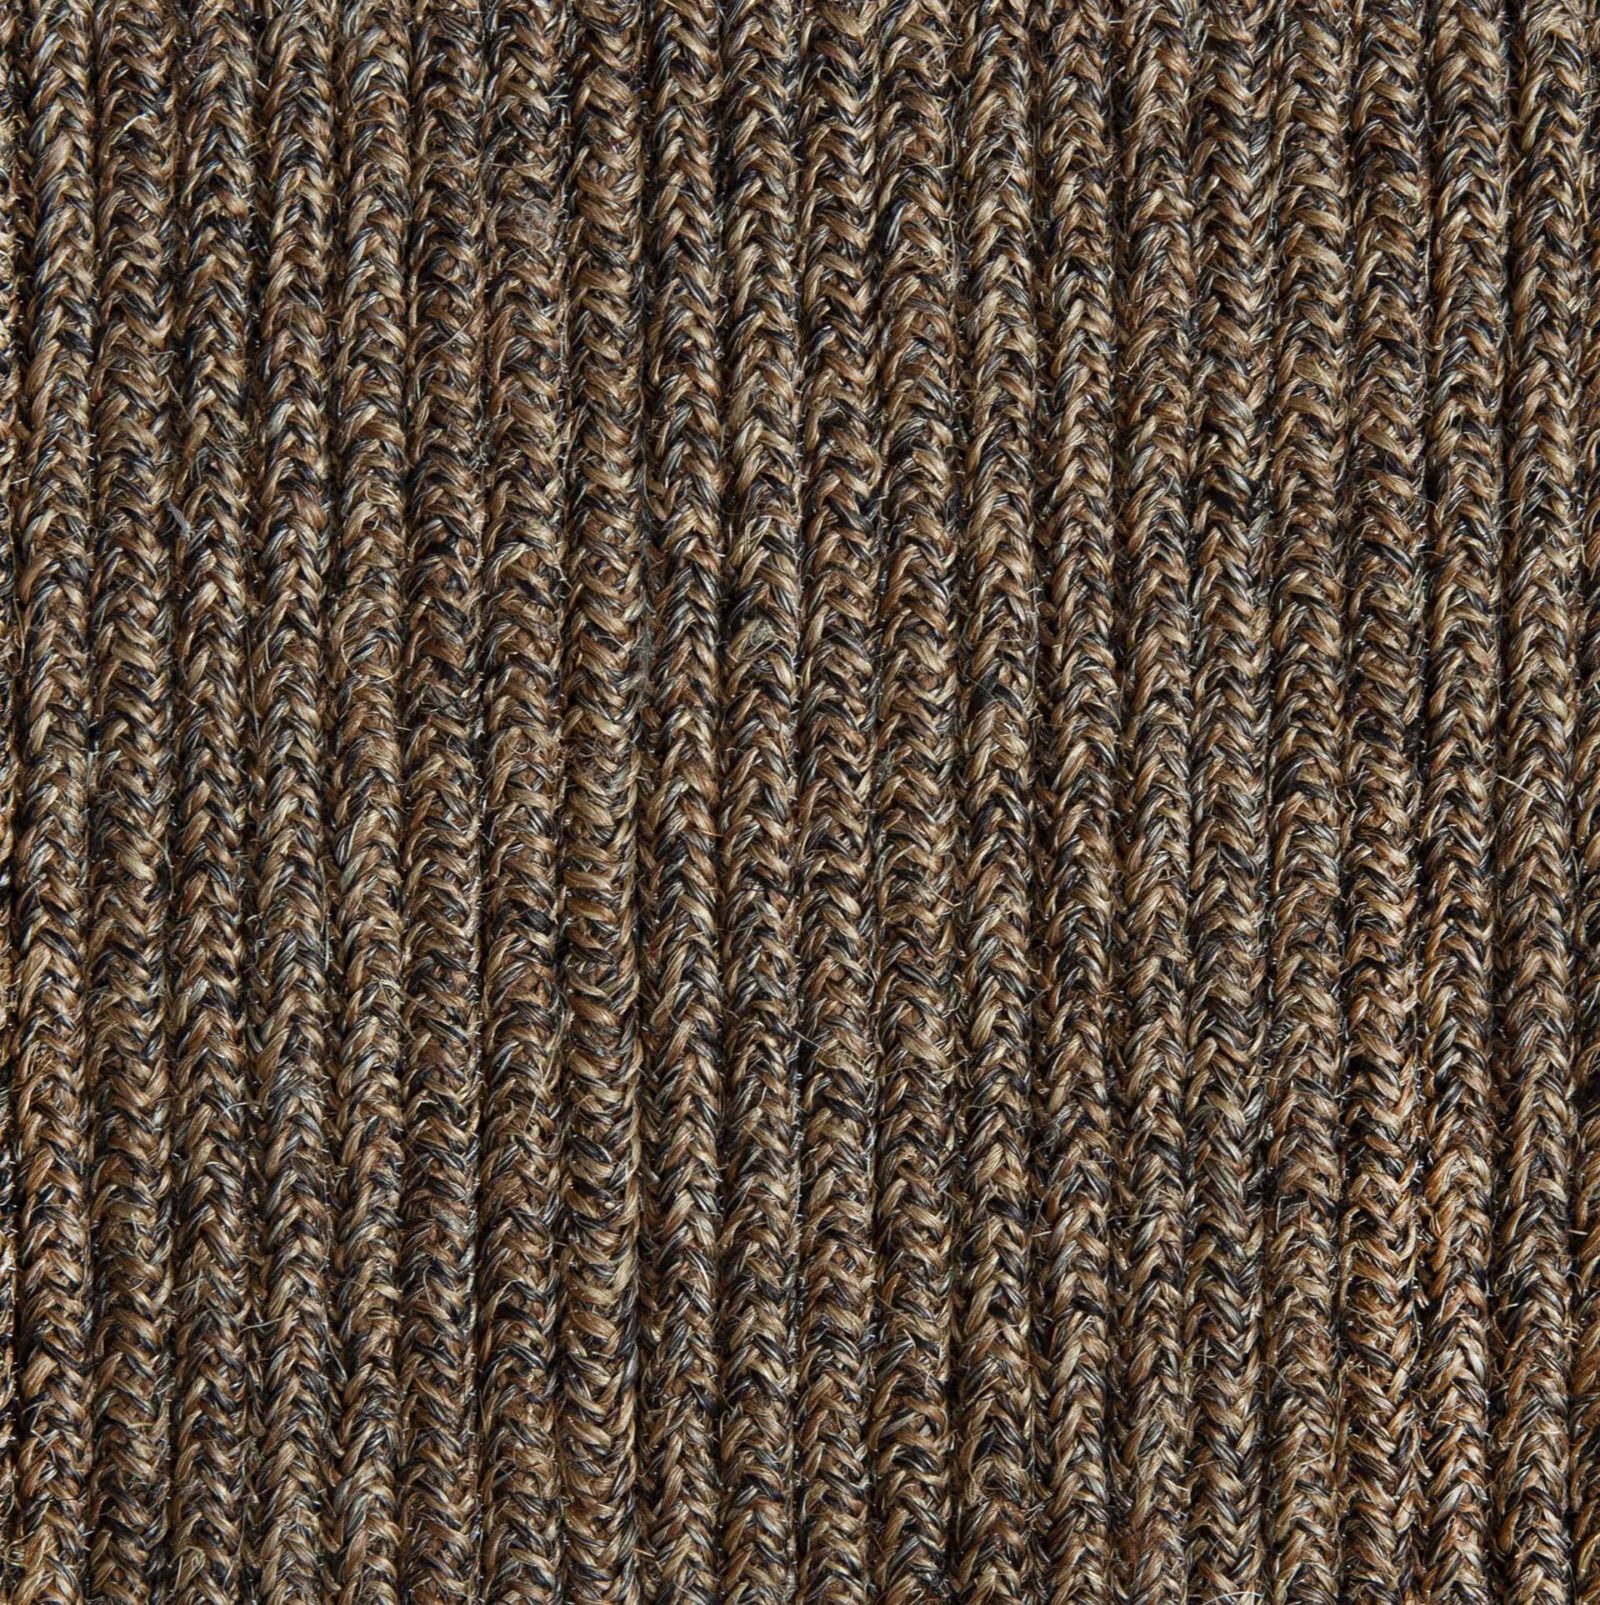 TinnappelMetz-Naturtex-rope-line-rug-brown-03